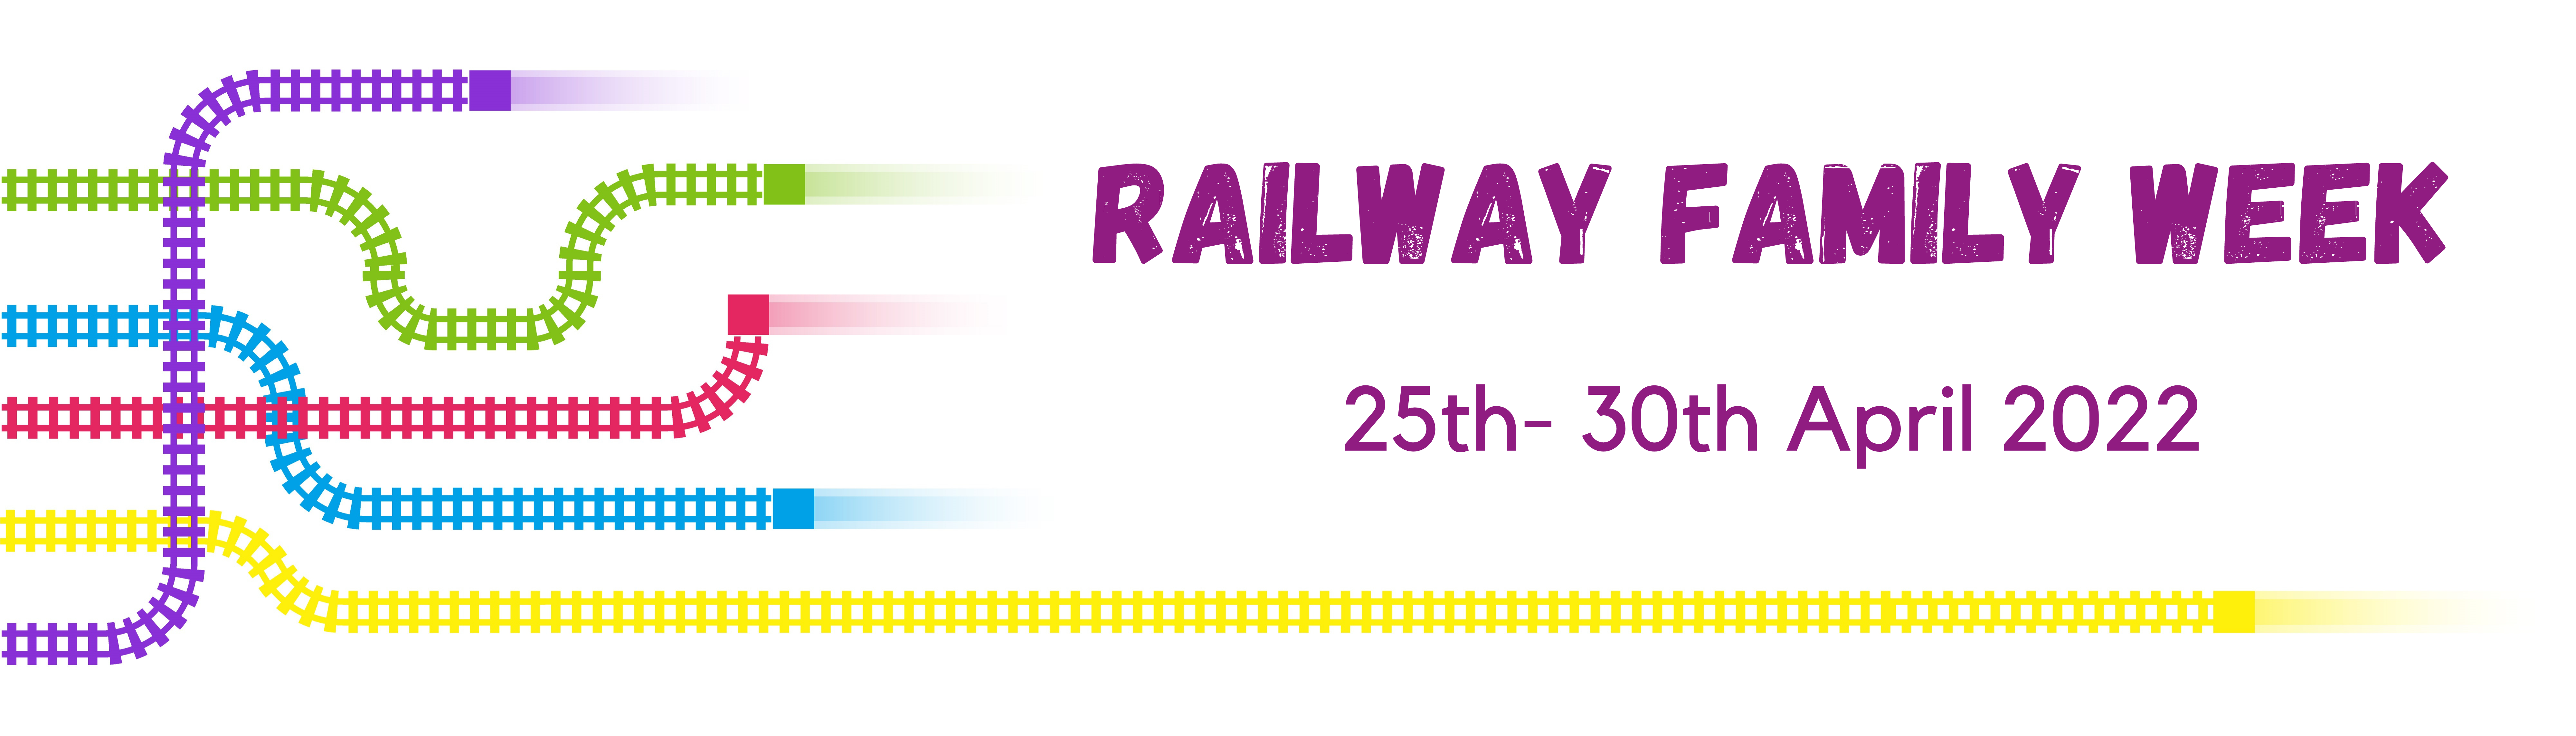 Railway Family Week | 25th - 30th April 2022